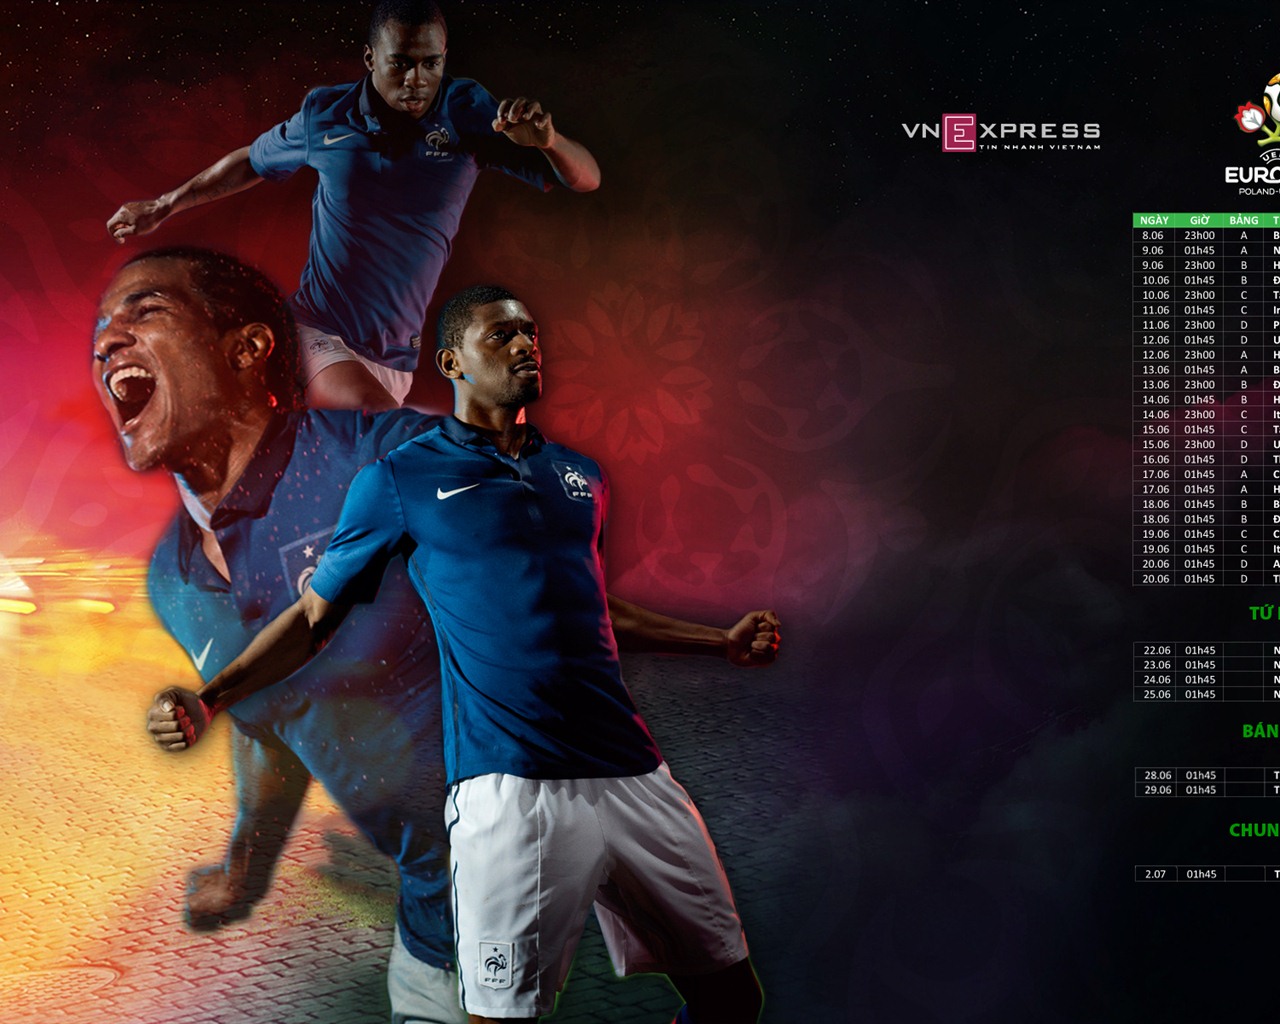 UEFA EURO 2012 HD wallpapers (2) #19 - 1280x1024